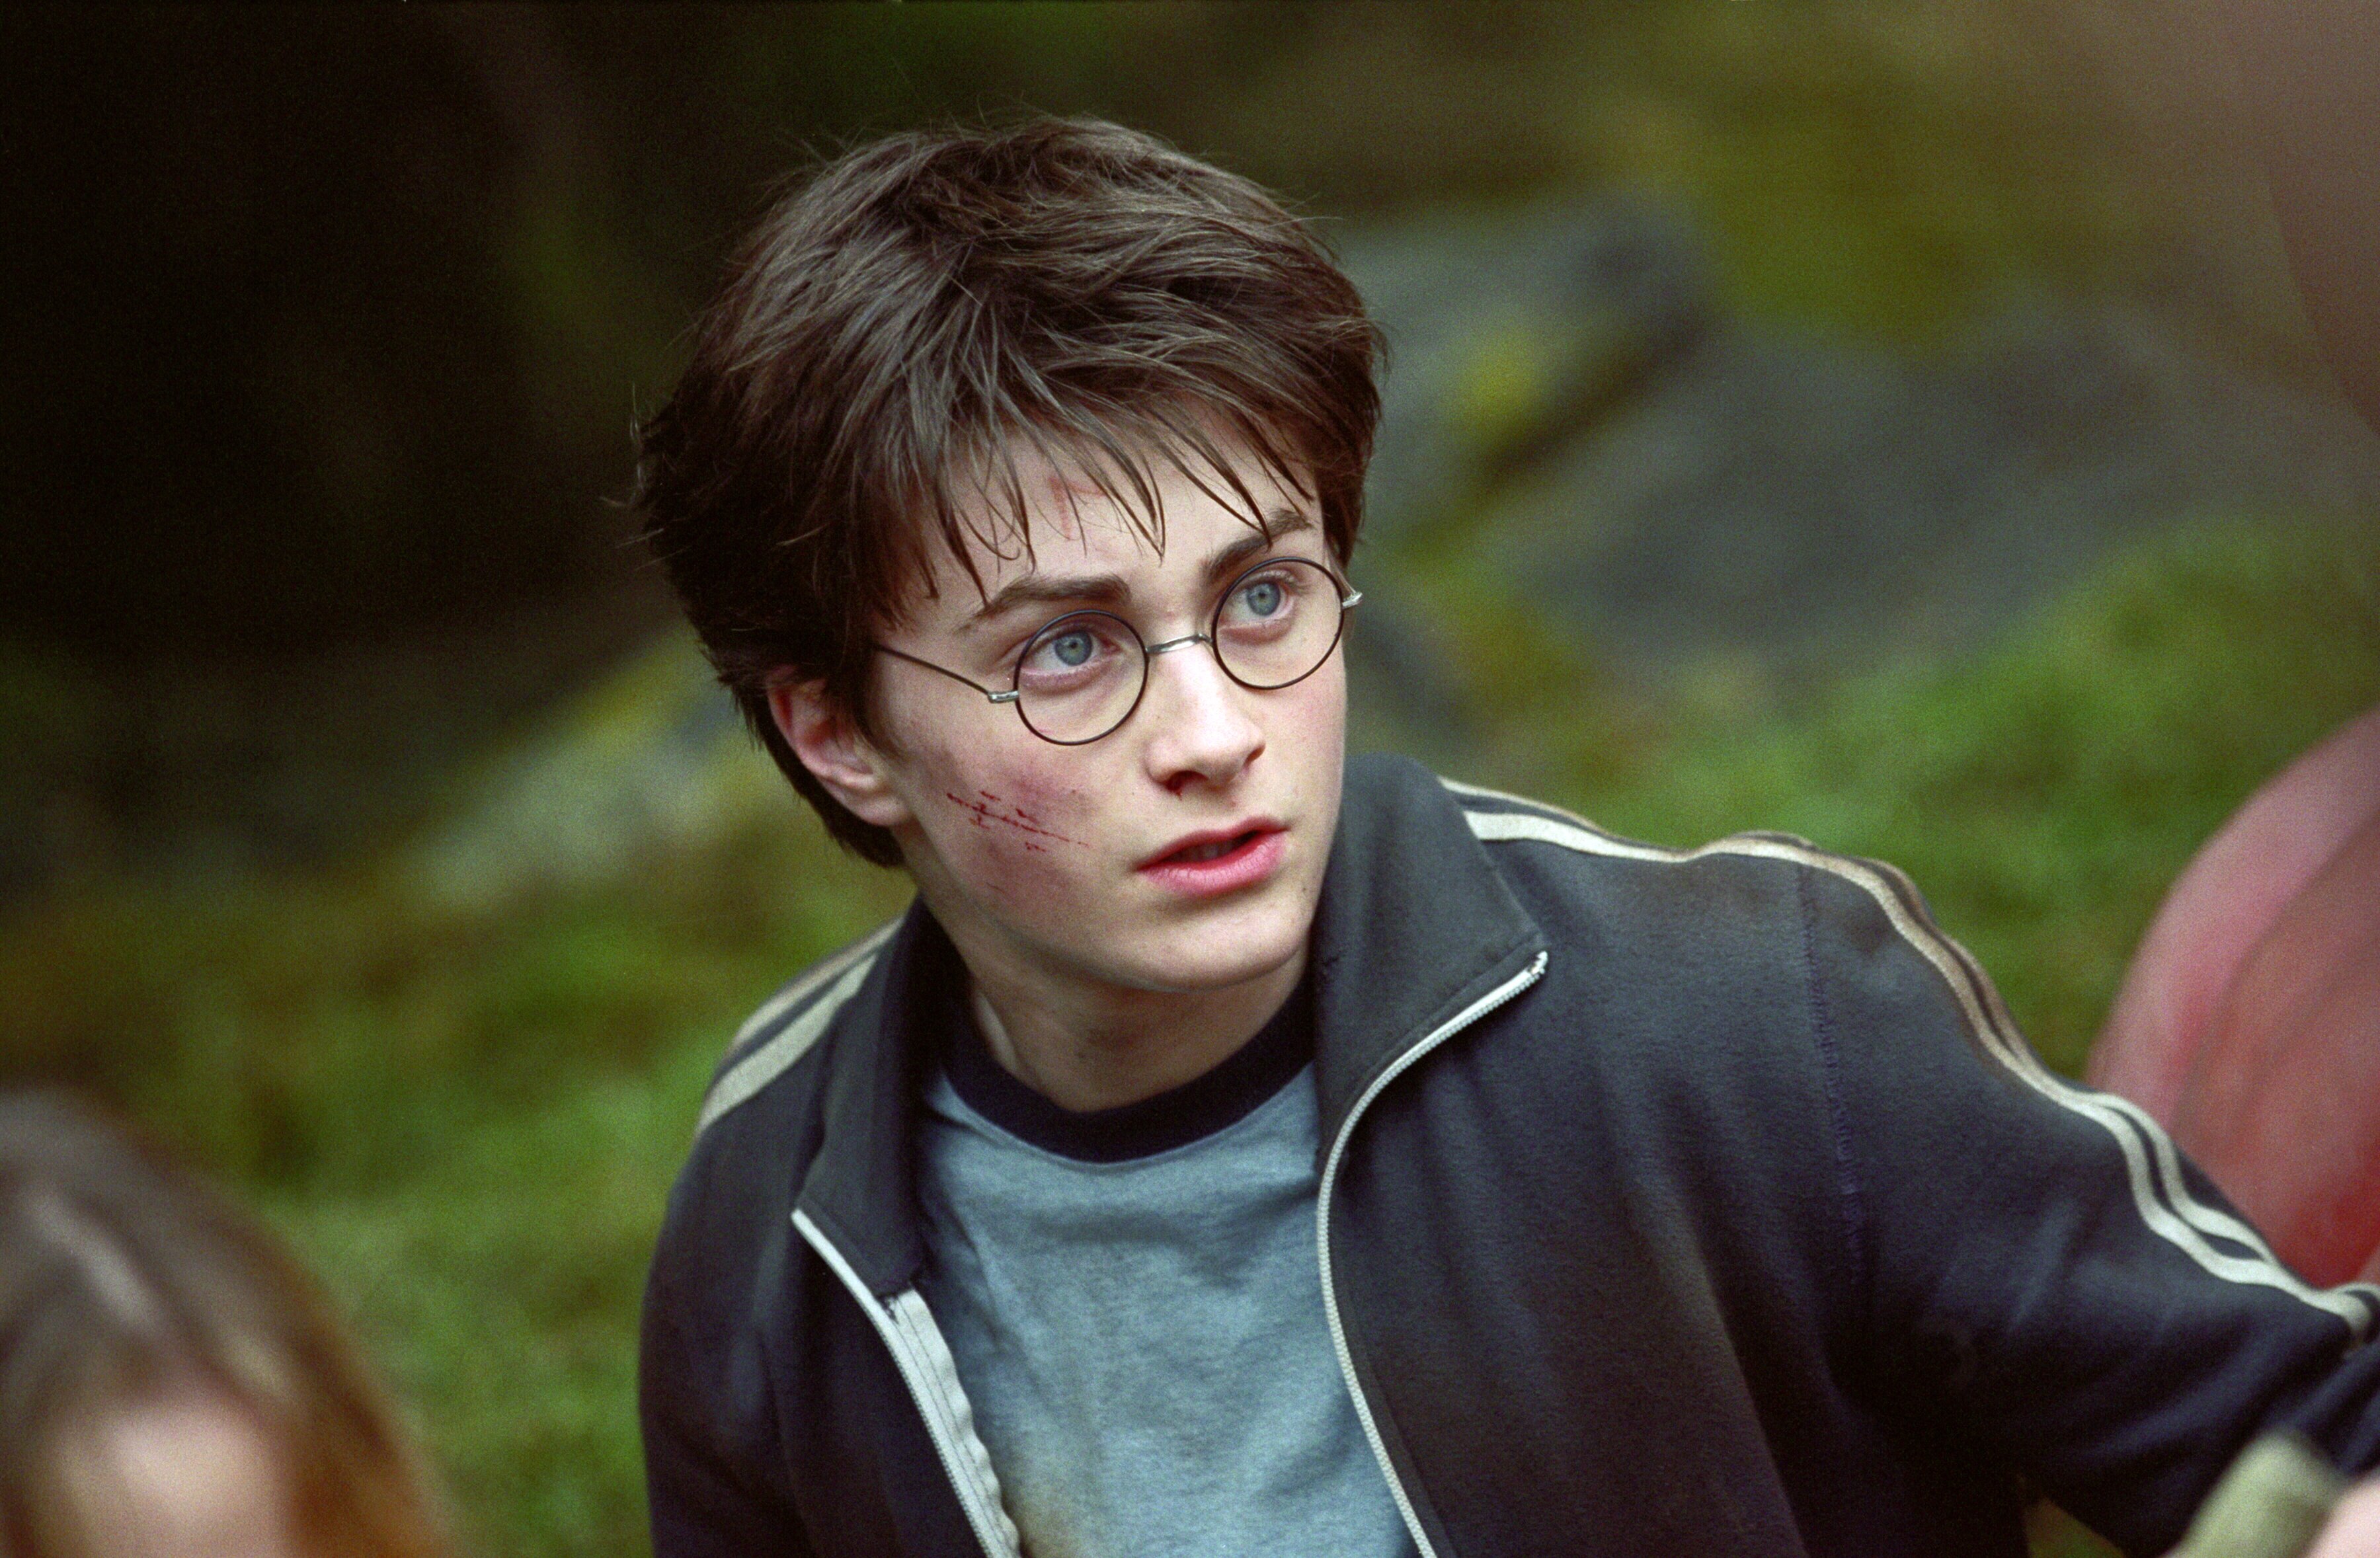 Movie Harry Potter and the Prisoner of Azkaban HD Wallpaper | Background Image